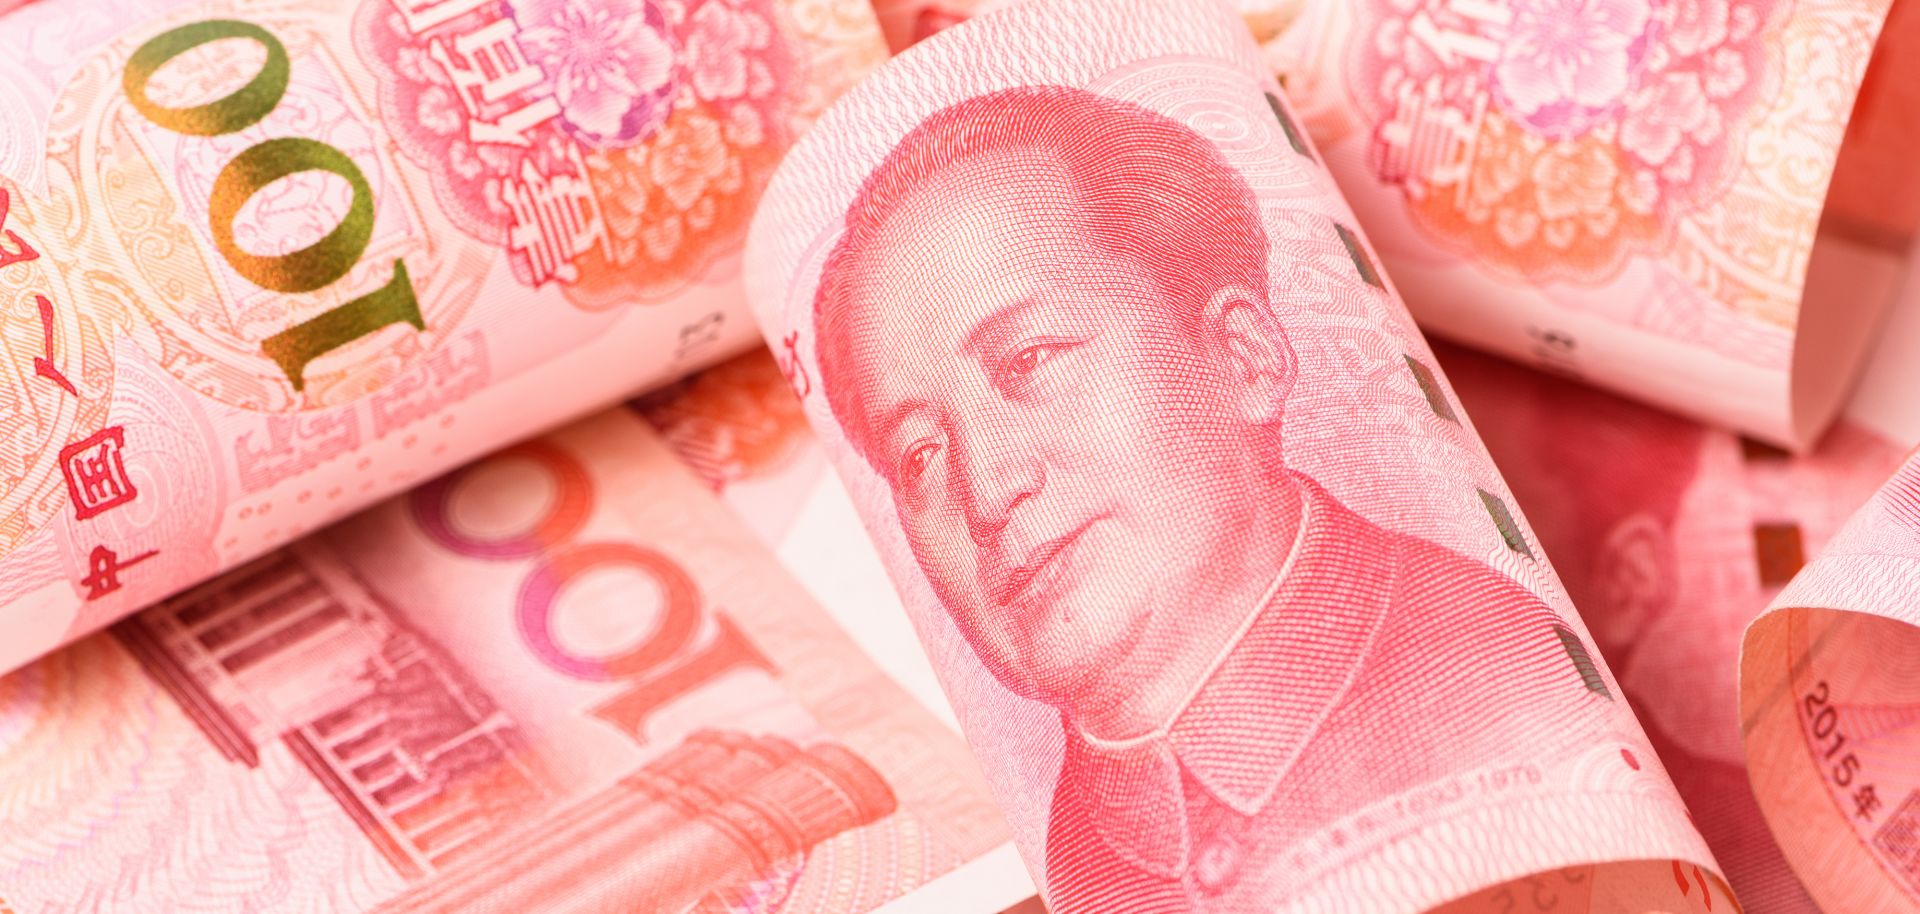 An image shows Chinese renminbi banknotes. 